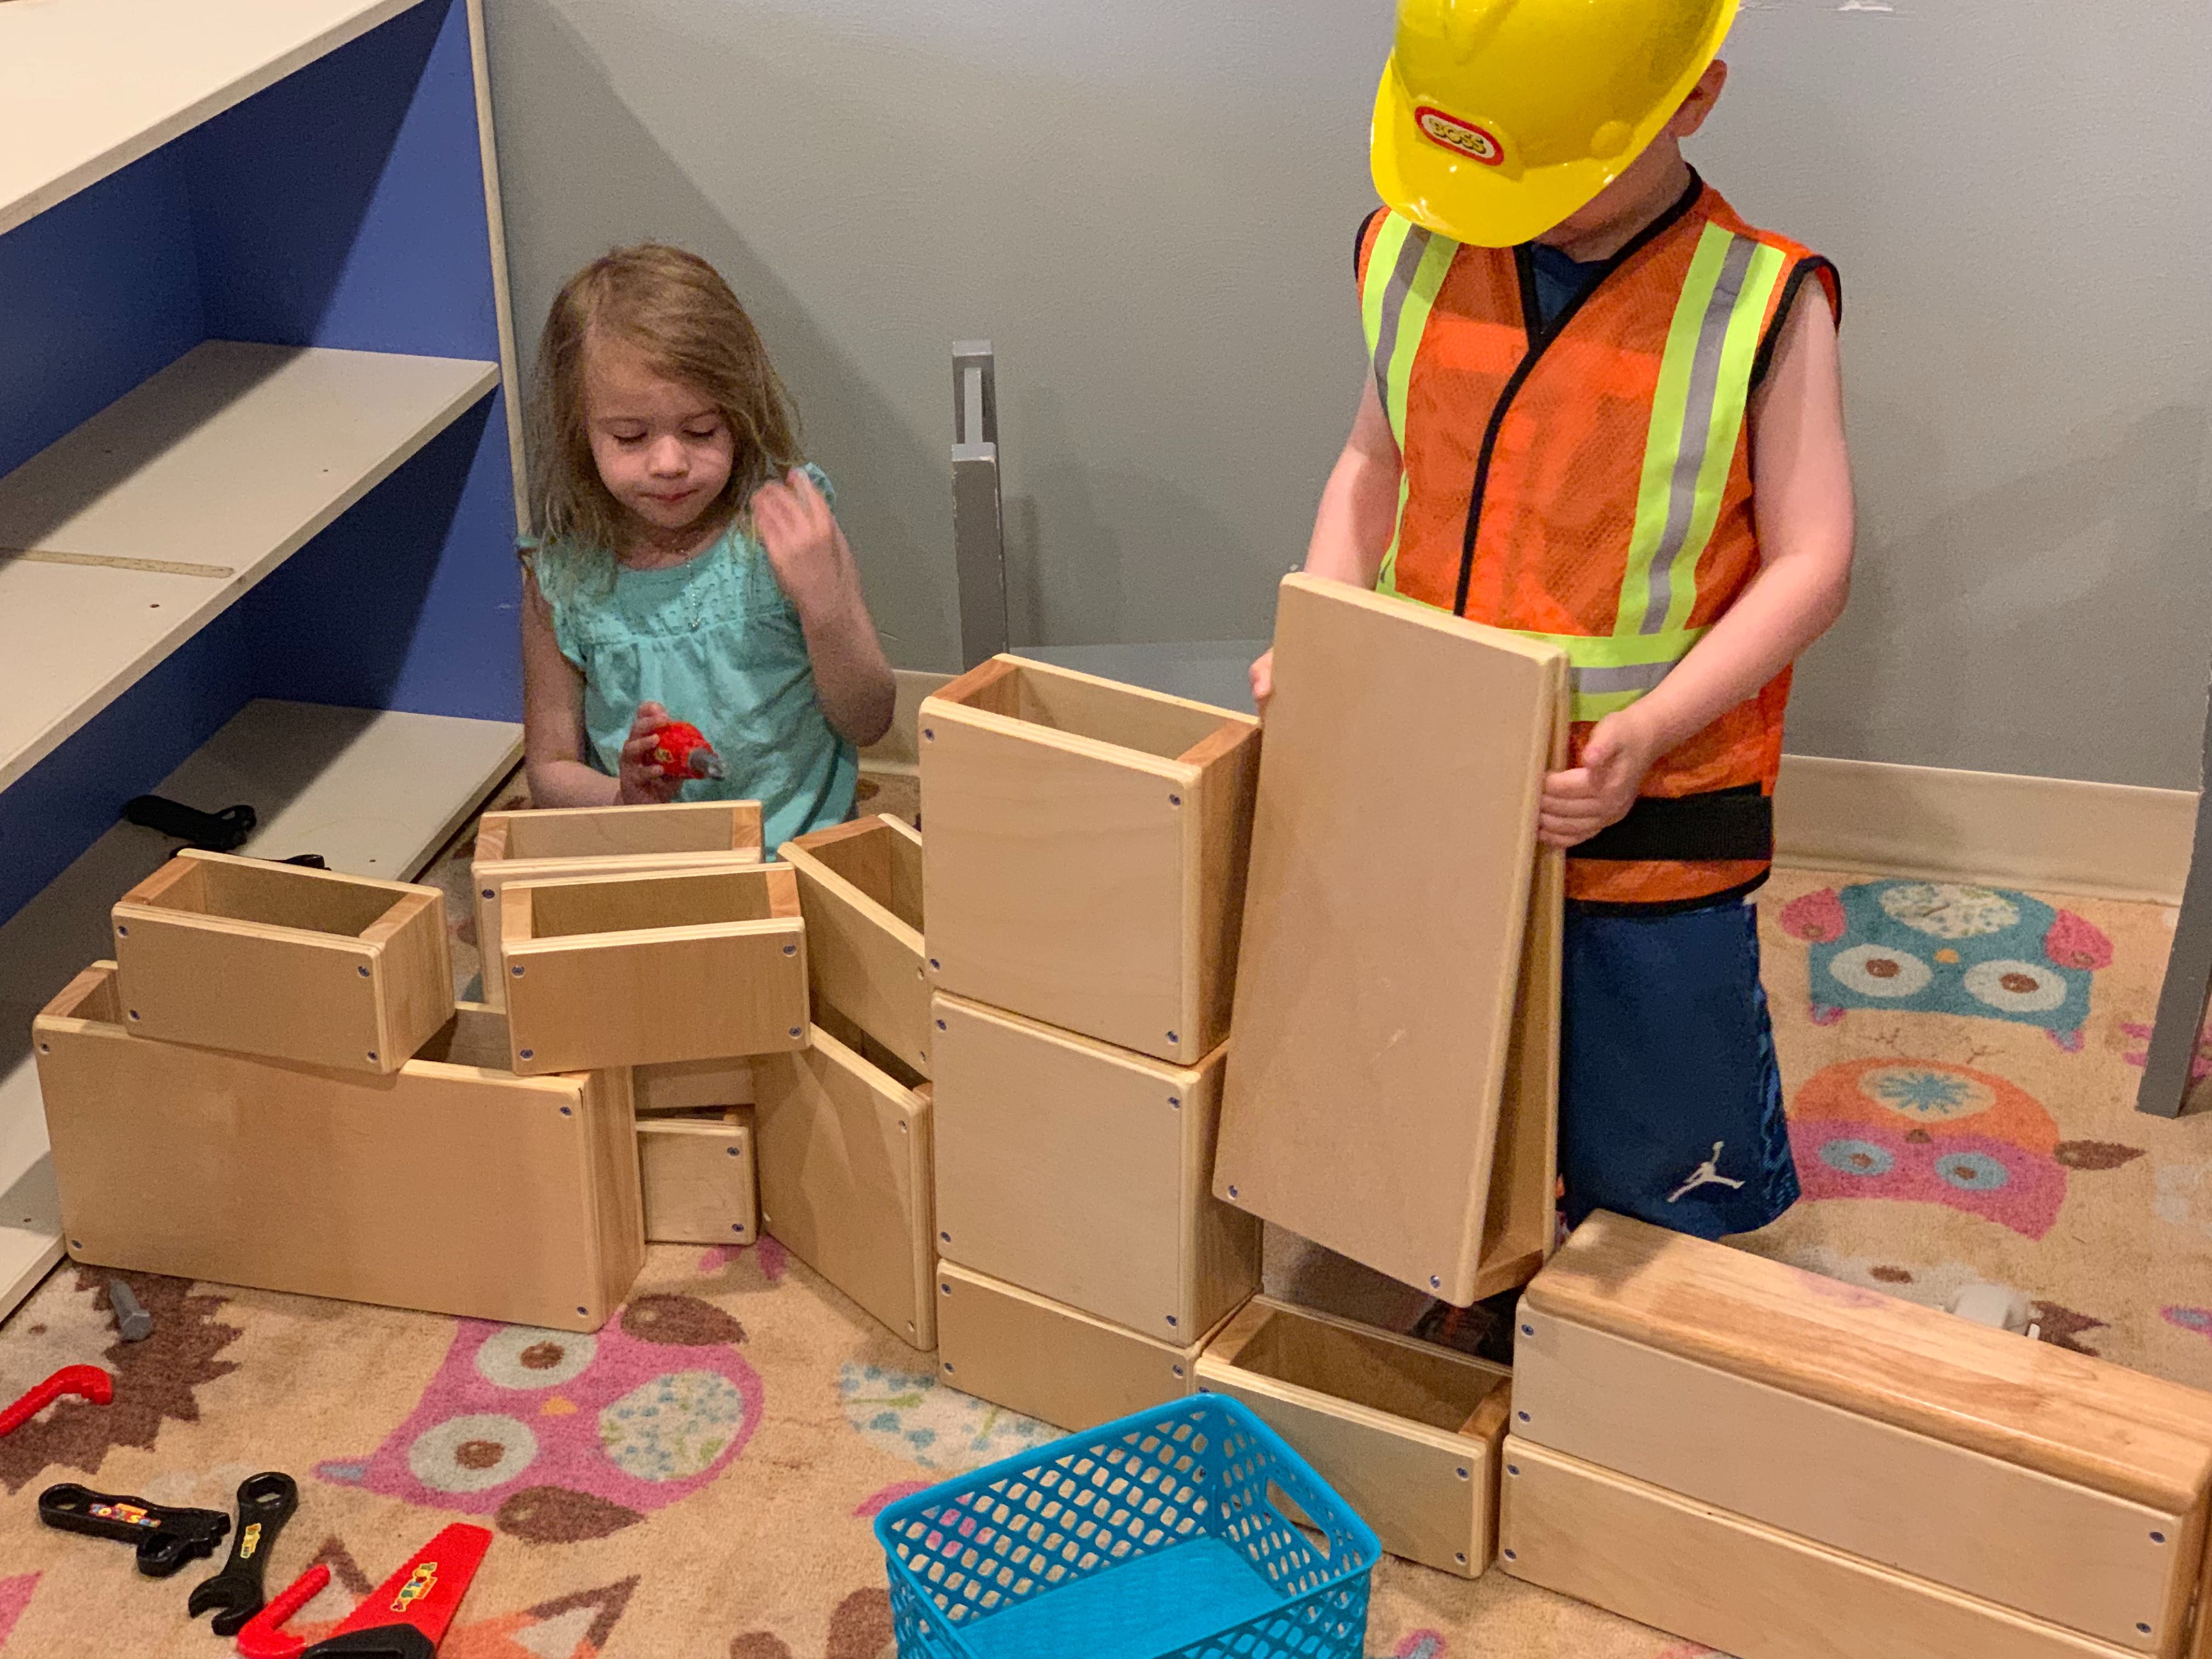 3k kids doing construction pretend play